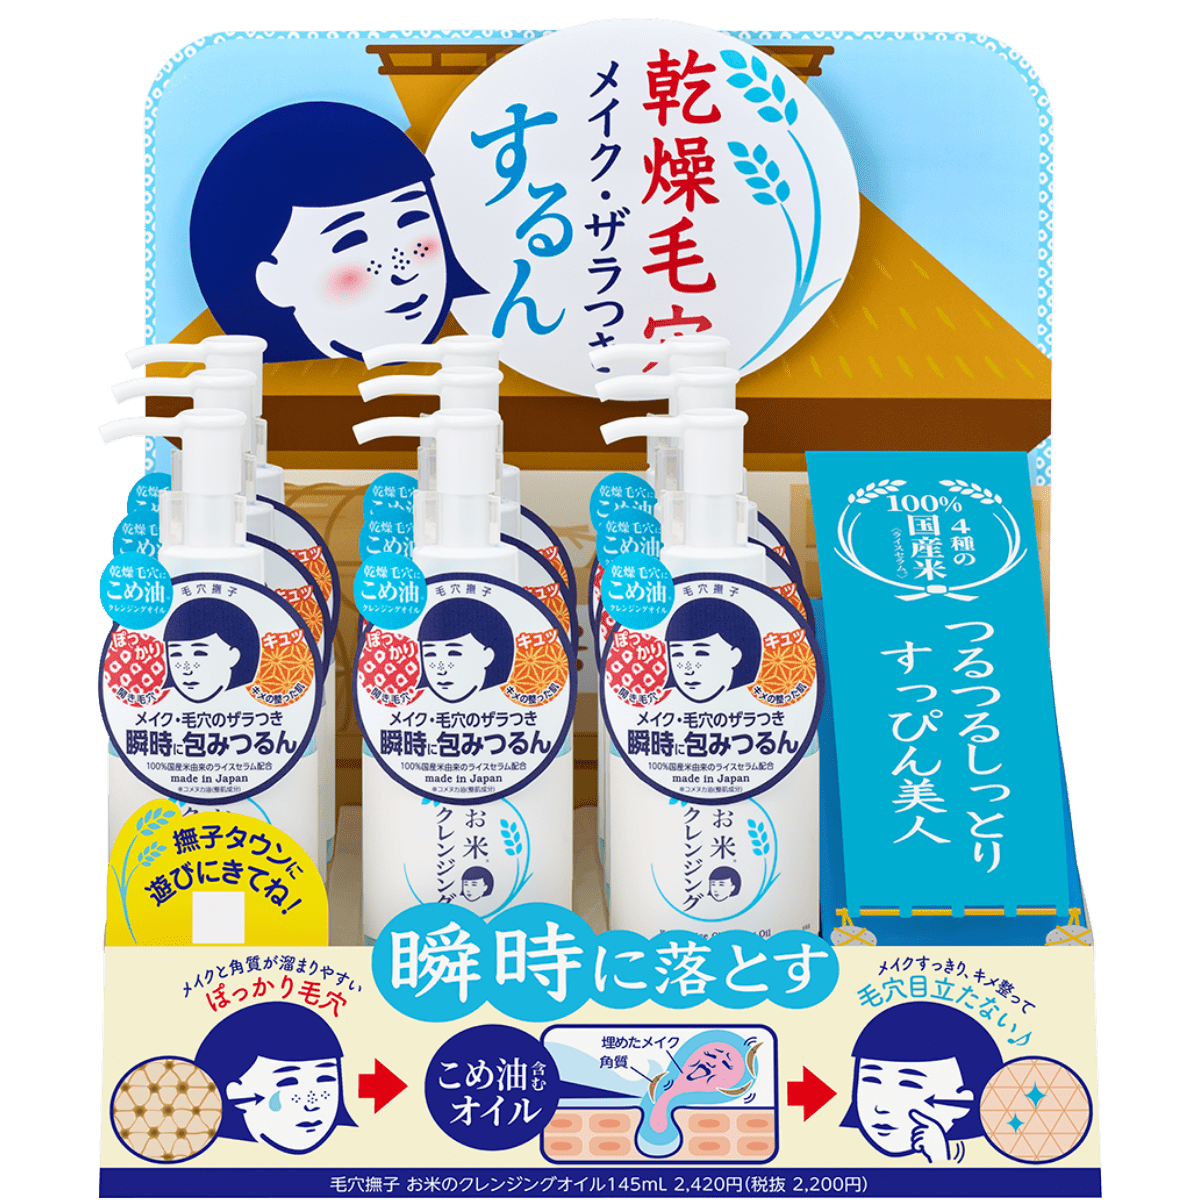 NADESHIKO Rice Cleansing Oil